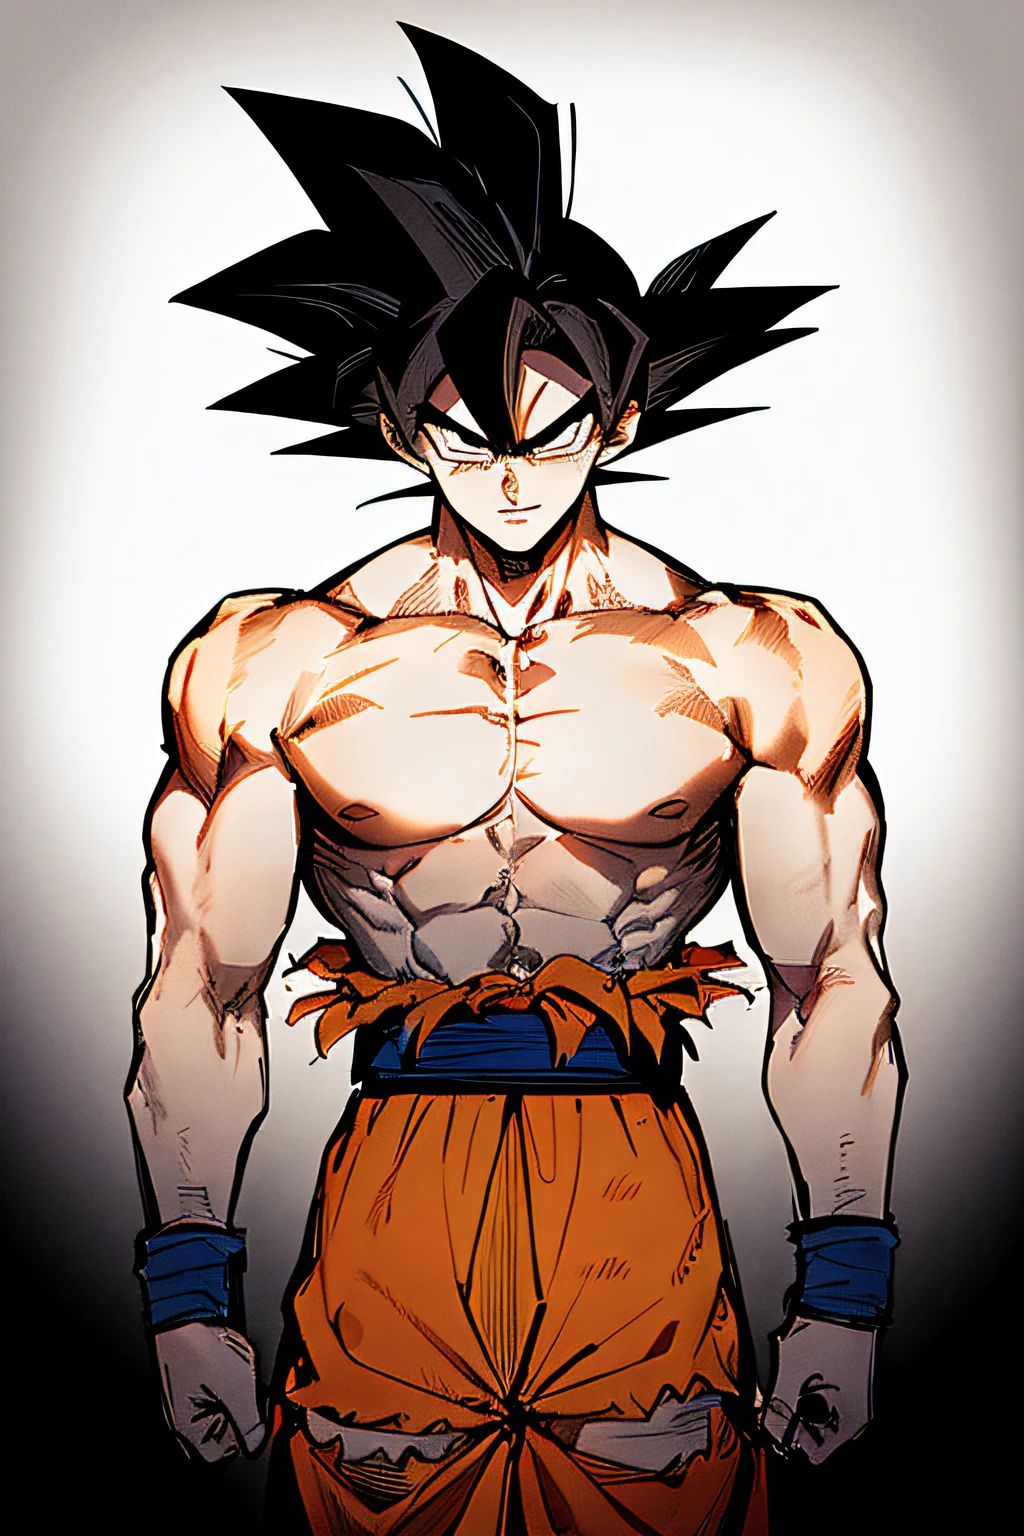 Son Goku, 1남, 닫힌 입, 남성 집중, 근육질의, 근육질의 male, 바위, 허리띠, 심각한, 홀로, 스파이크 머리, 토플리스 남성, 찢어진 옷, 울트라 본능, 검은 눈, 흑발, ((걸작))